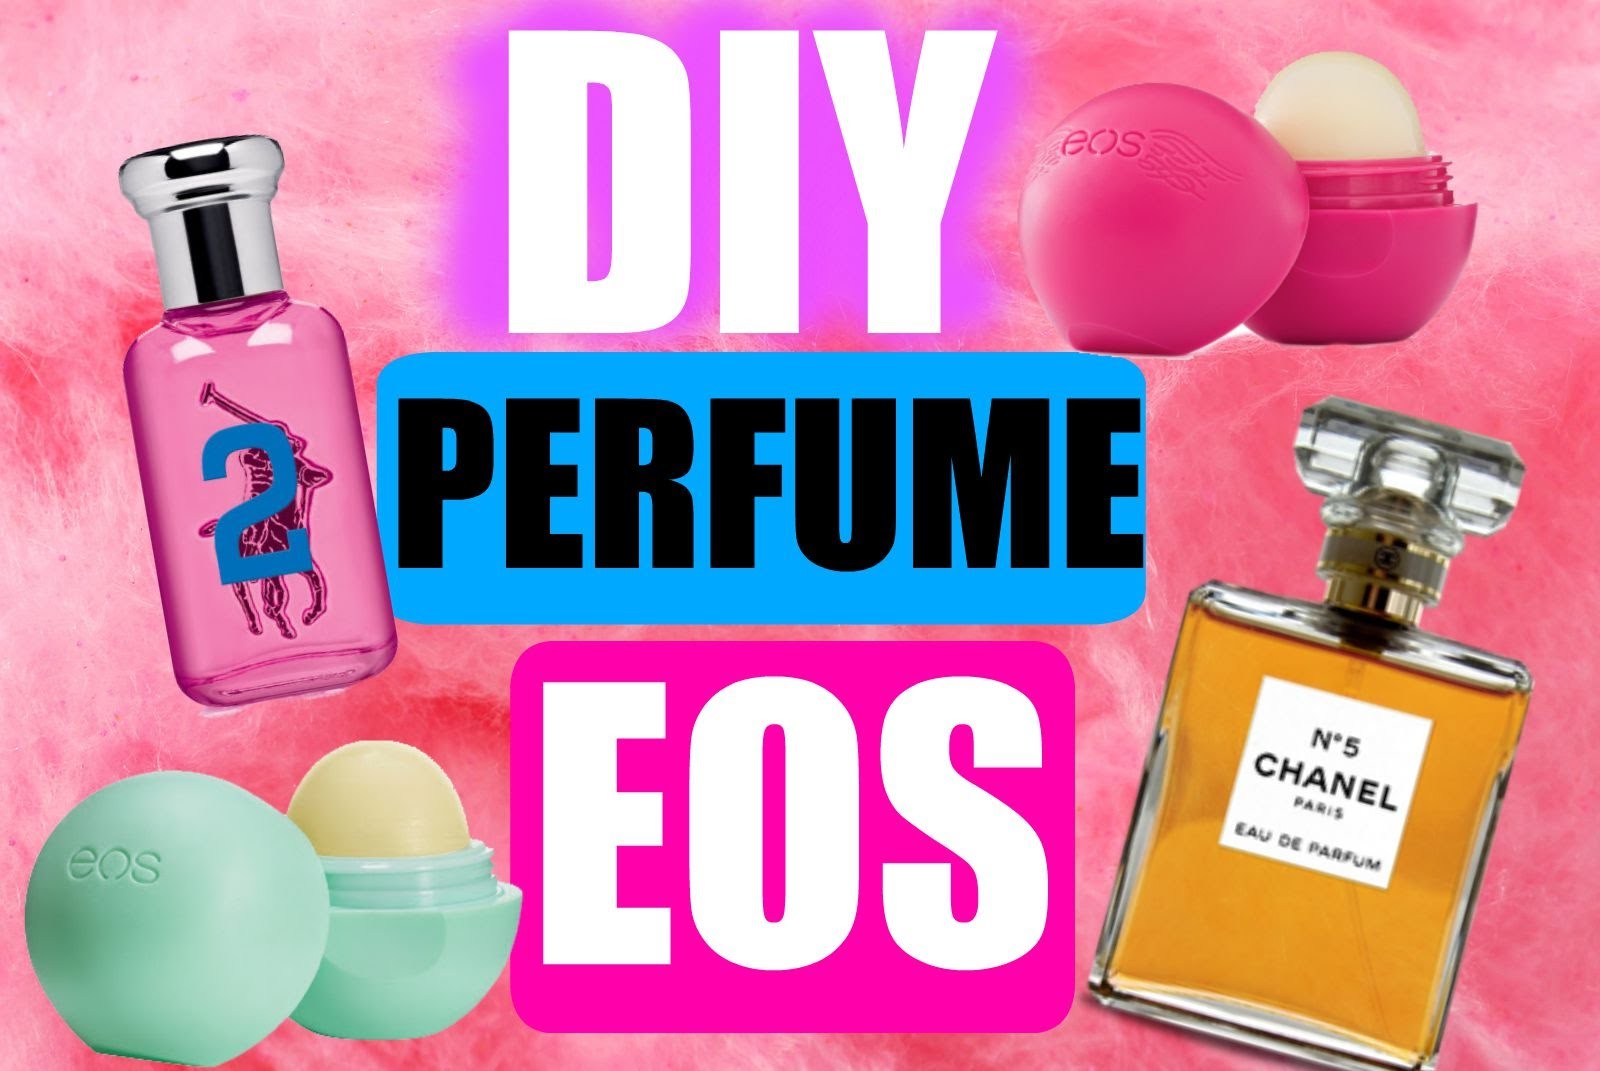 DIY perfume EOS